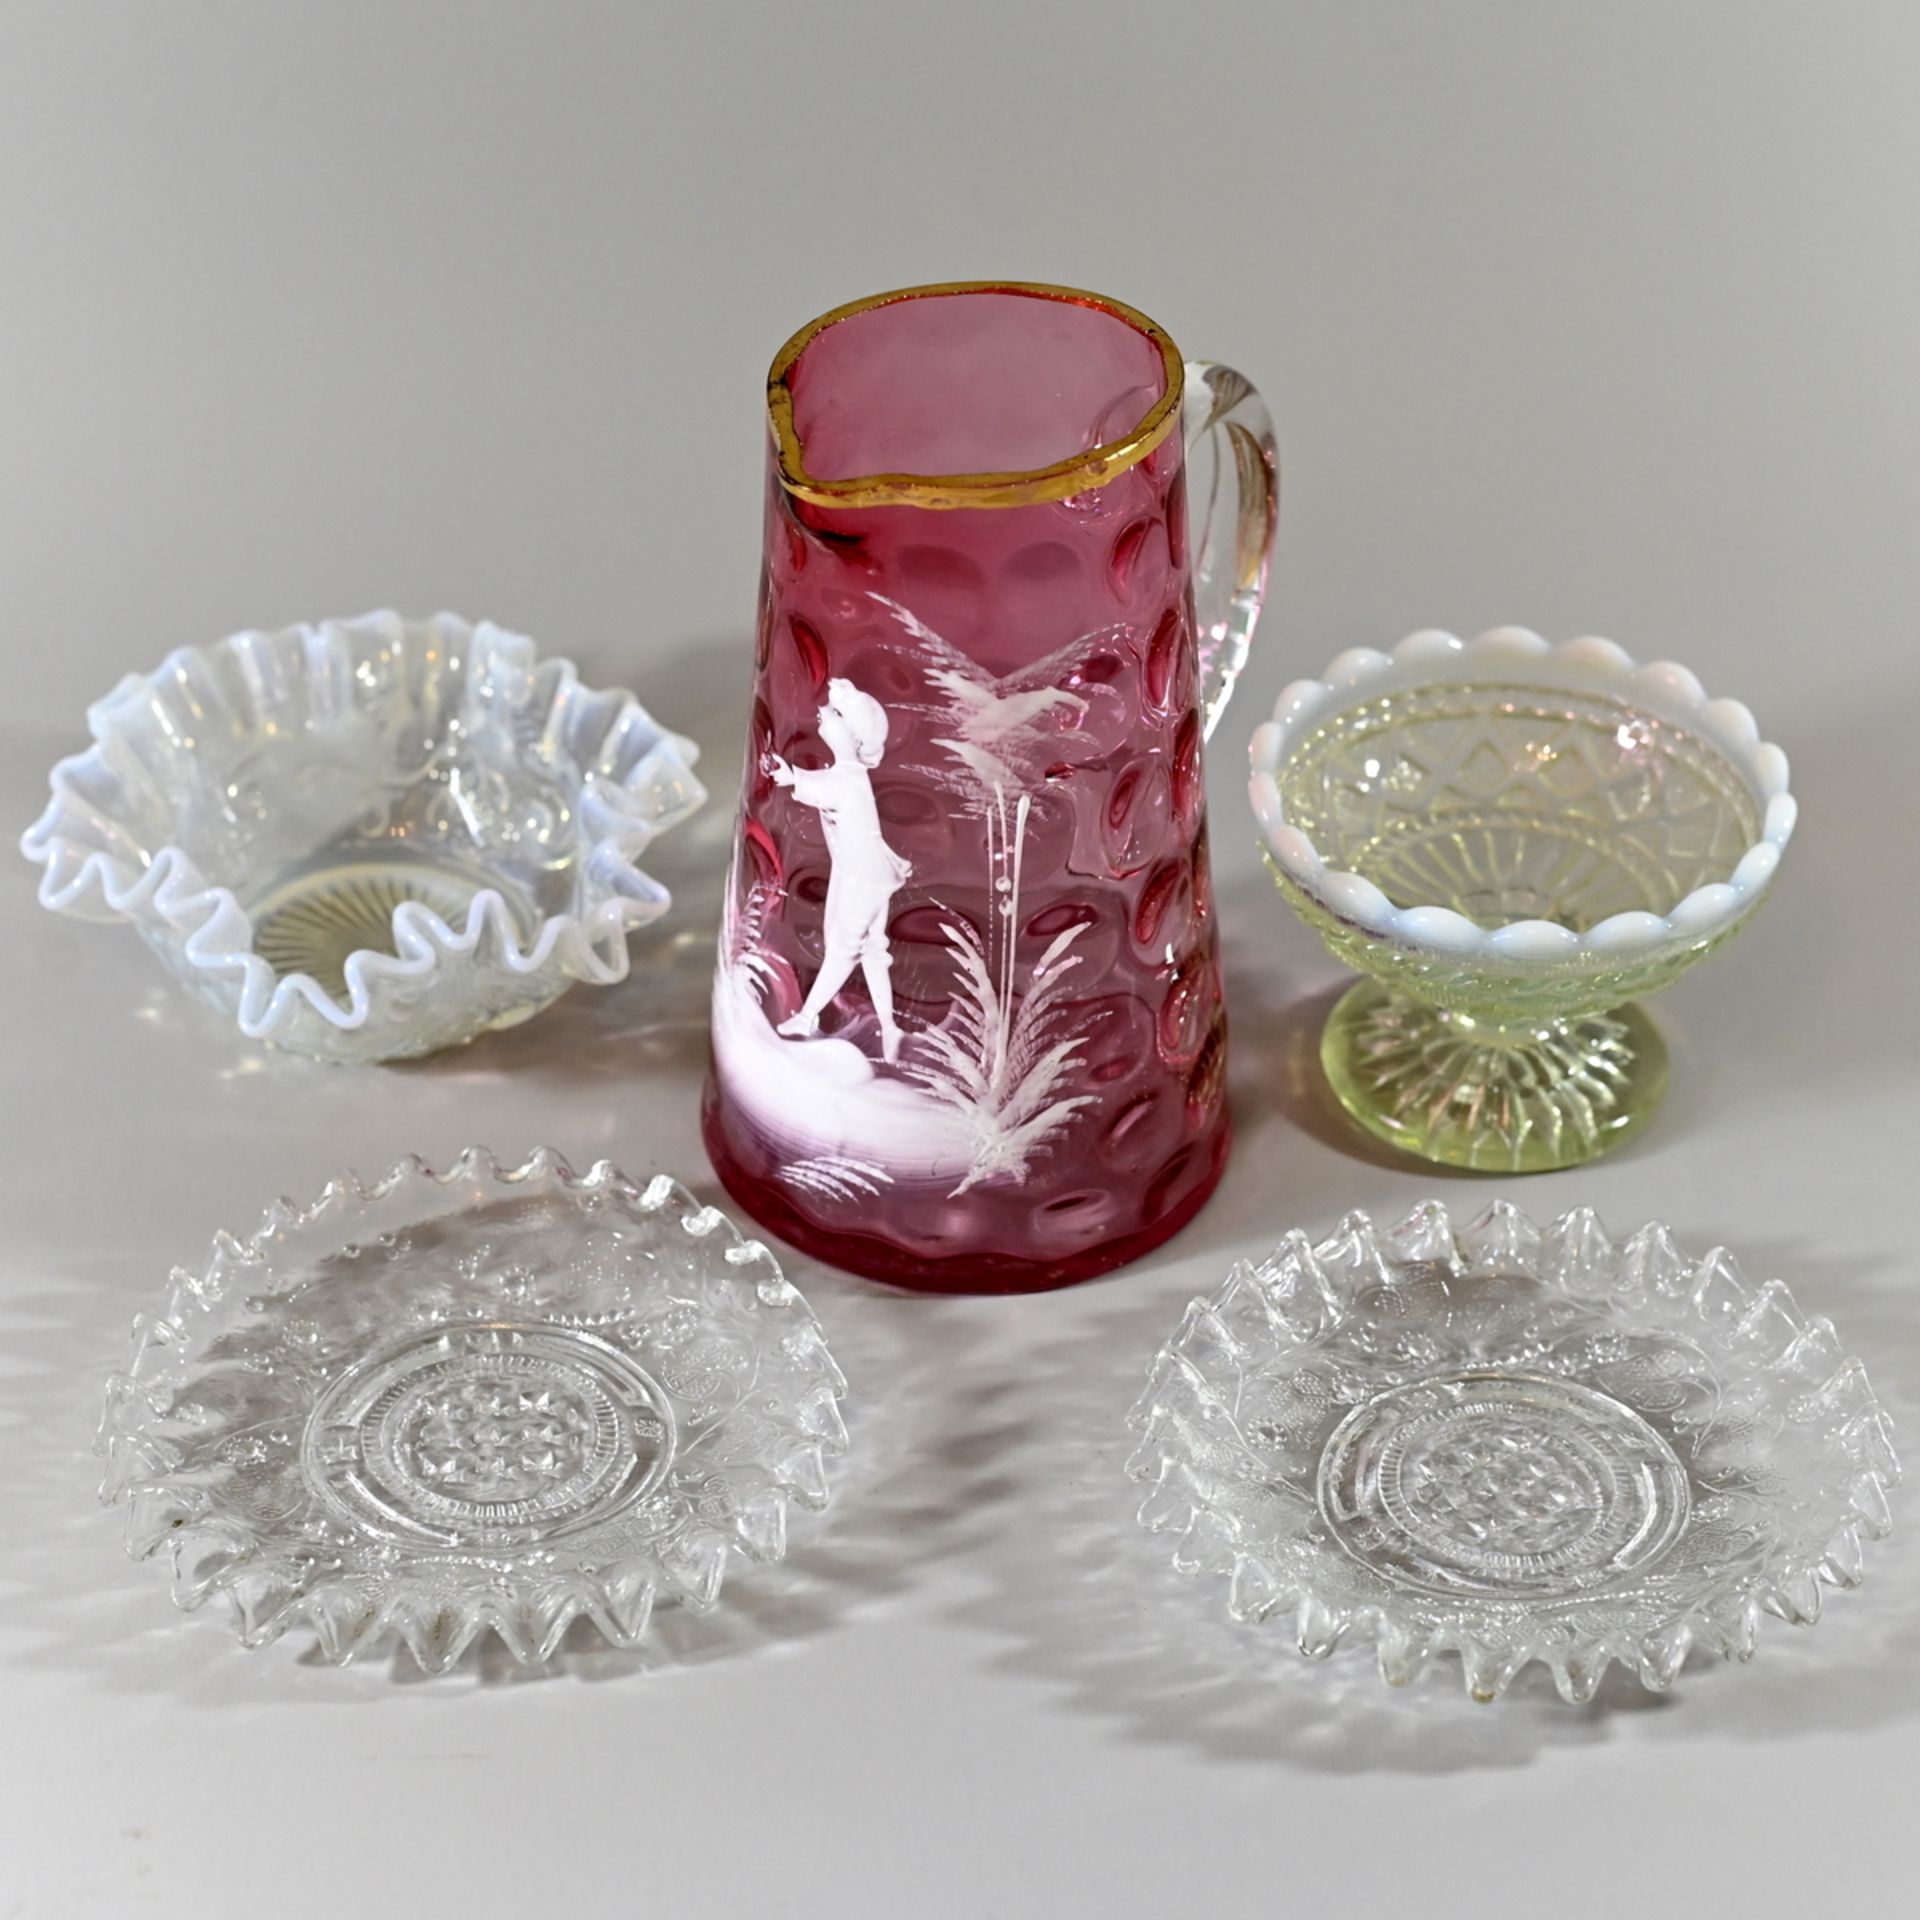 Konvolut Gründerzeitglas, 5 Teile, 2 Teller (D. 11-12 cm) farbloses Glas mit weißem, gedrücktem